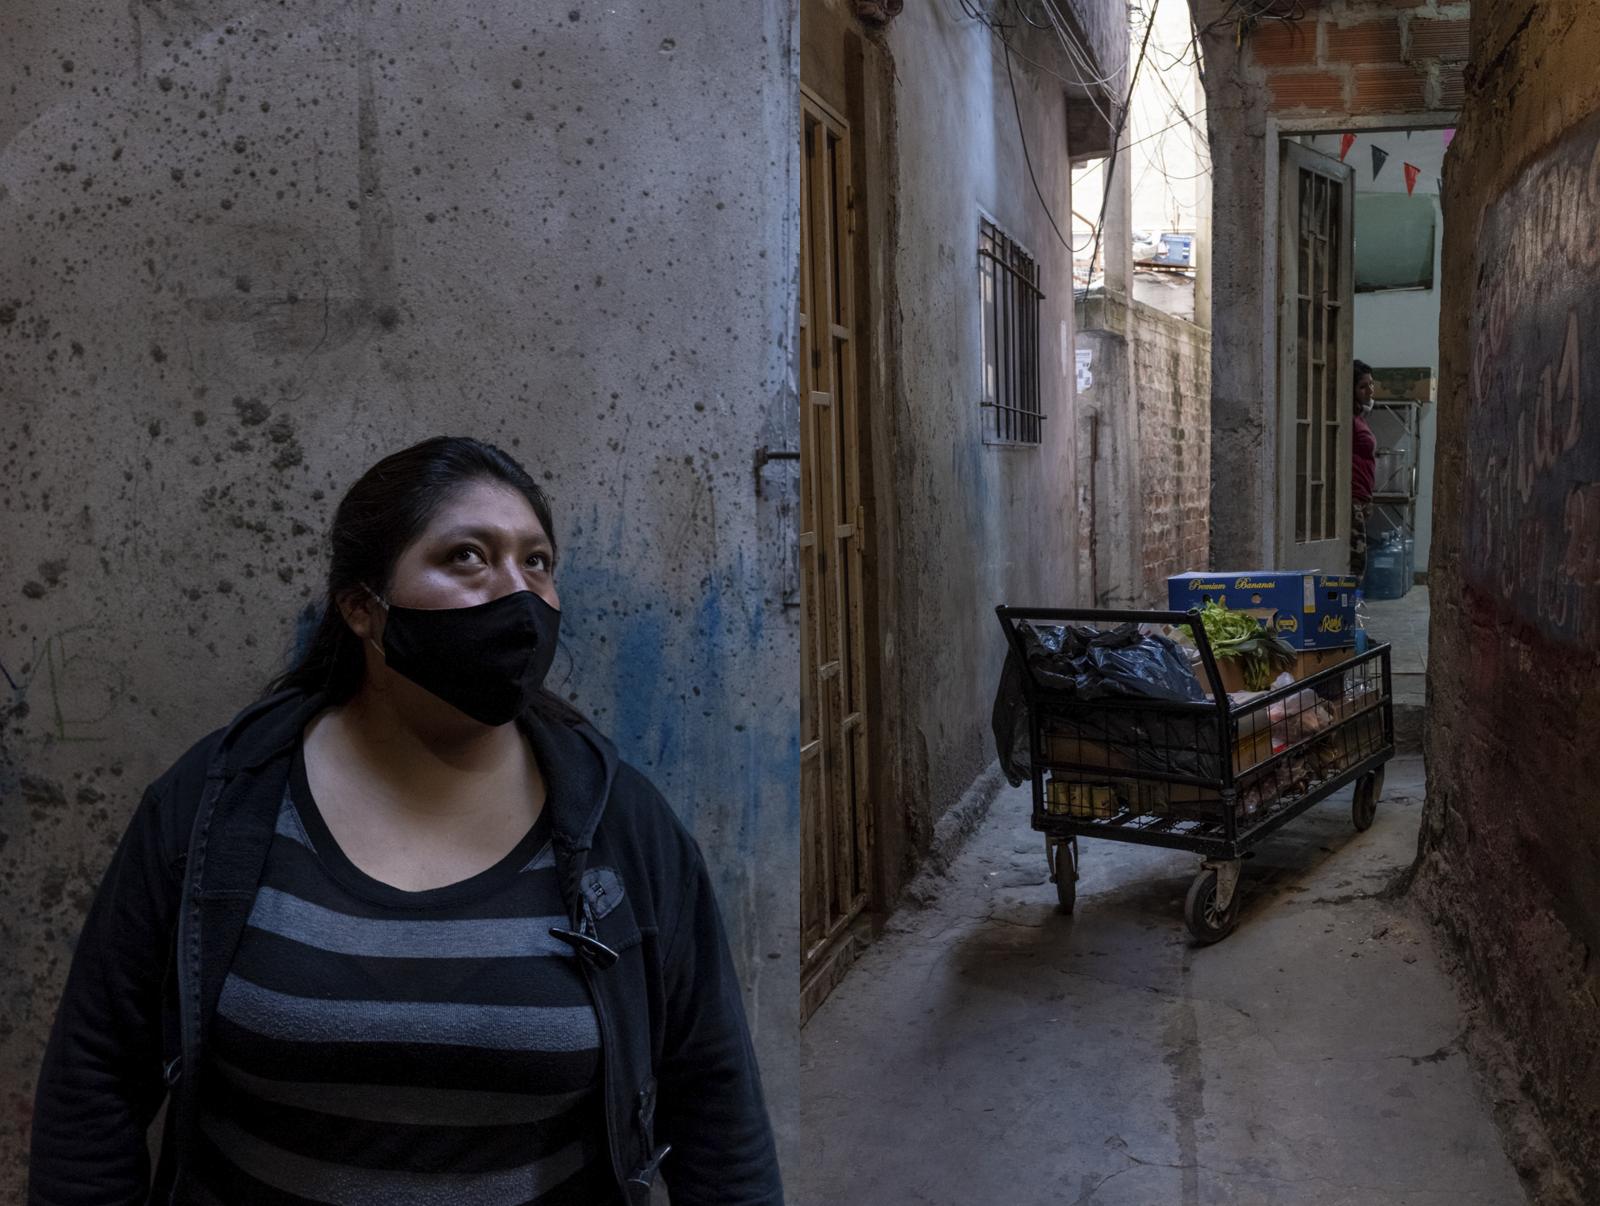 Image from IMAGENES / IMAGES - Anita Pouchard / Mujeres migrantes al frente del COVID...